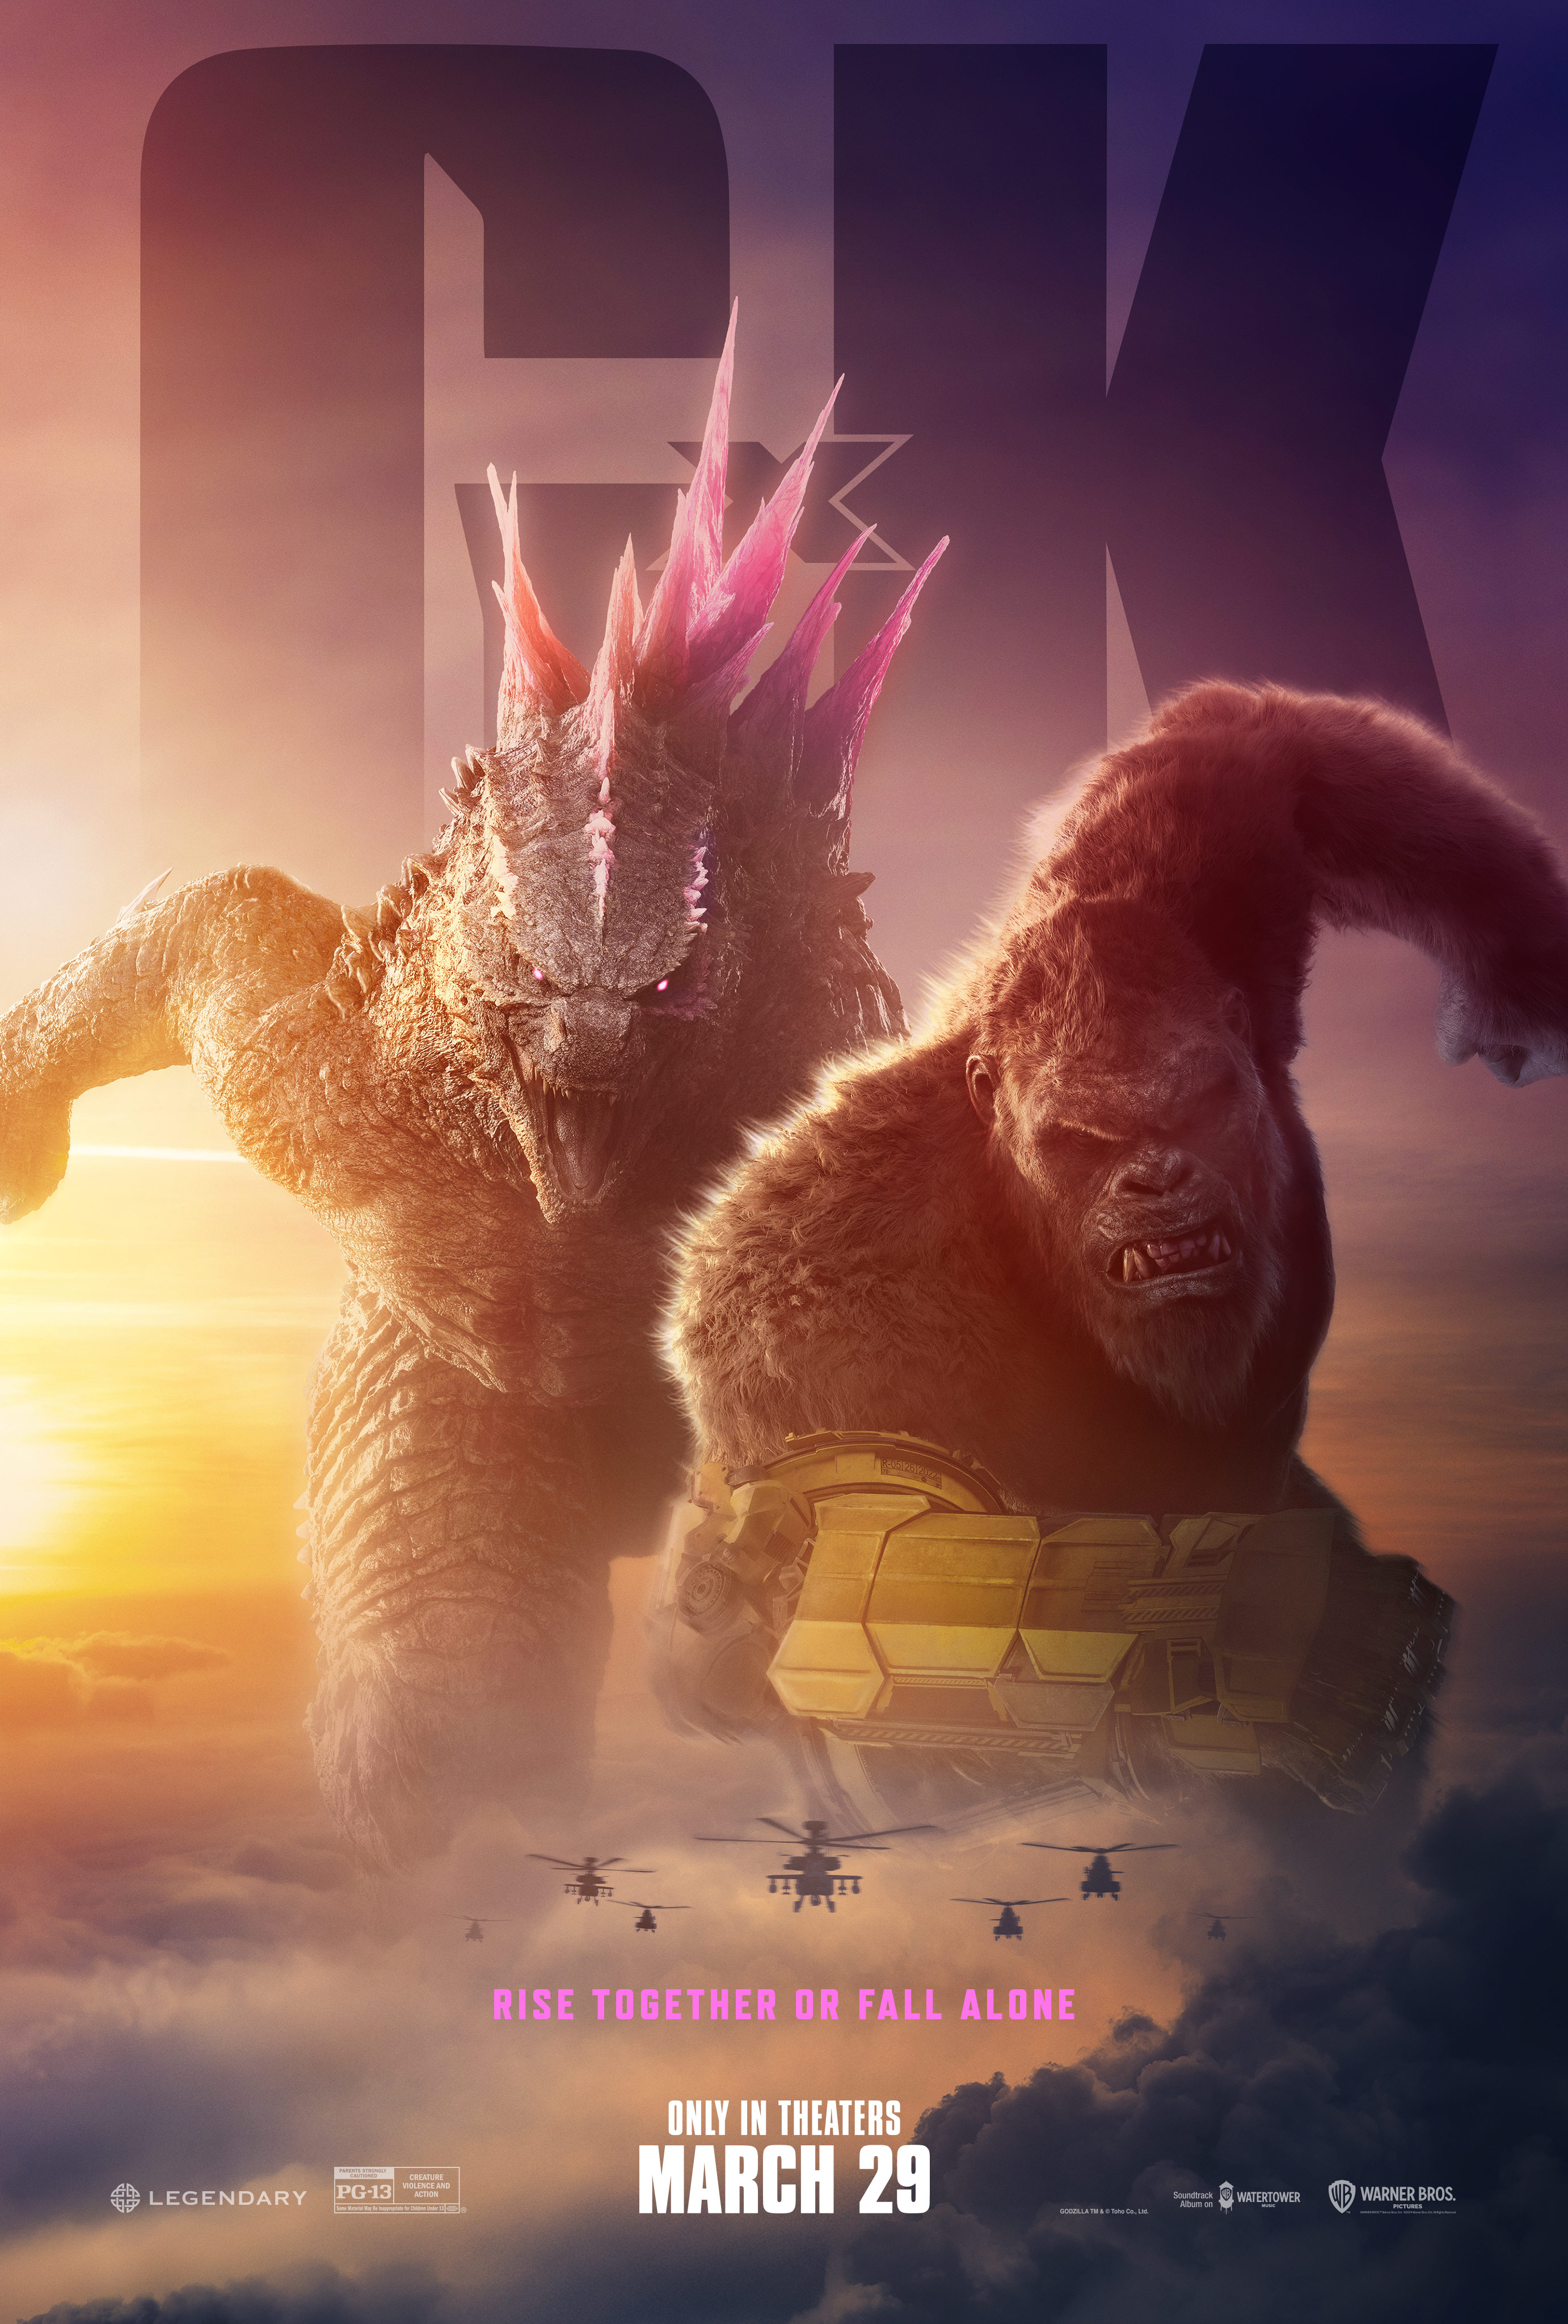 poster movie Godzilla x Kong: The New Empire